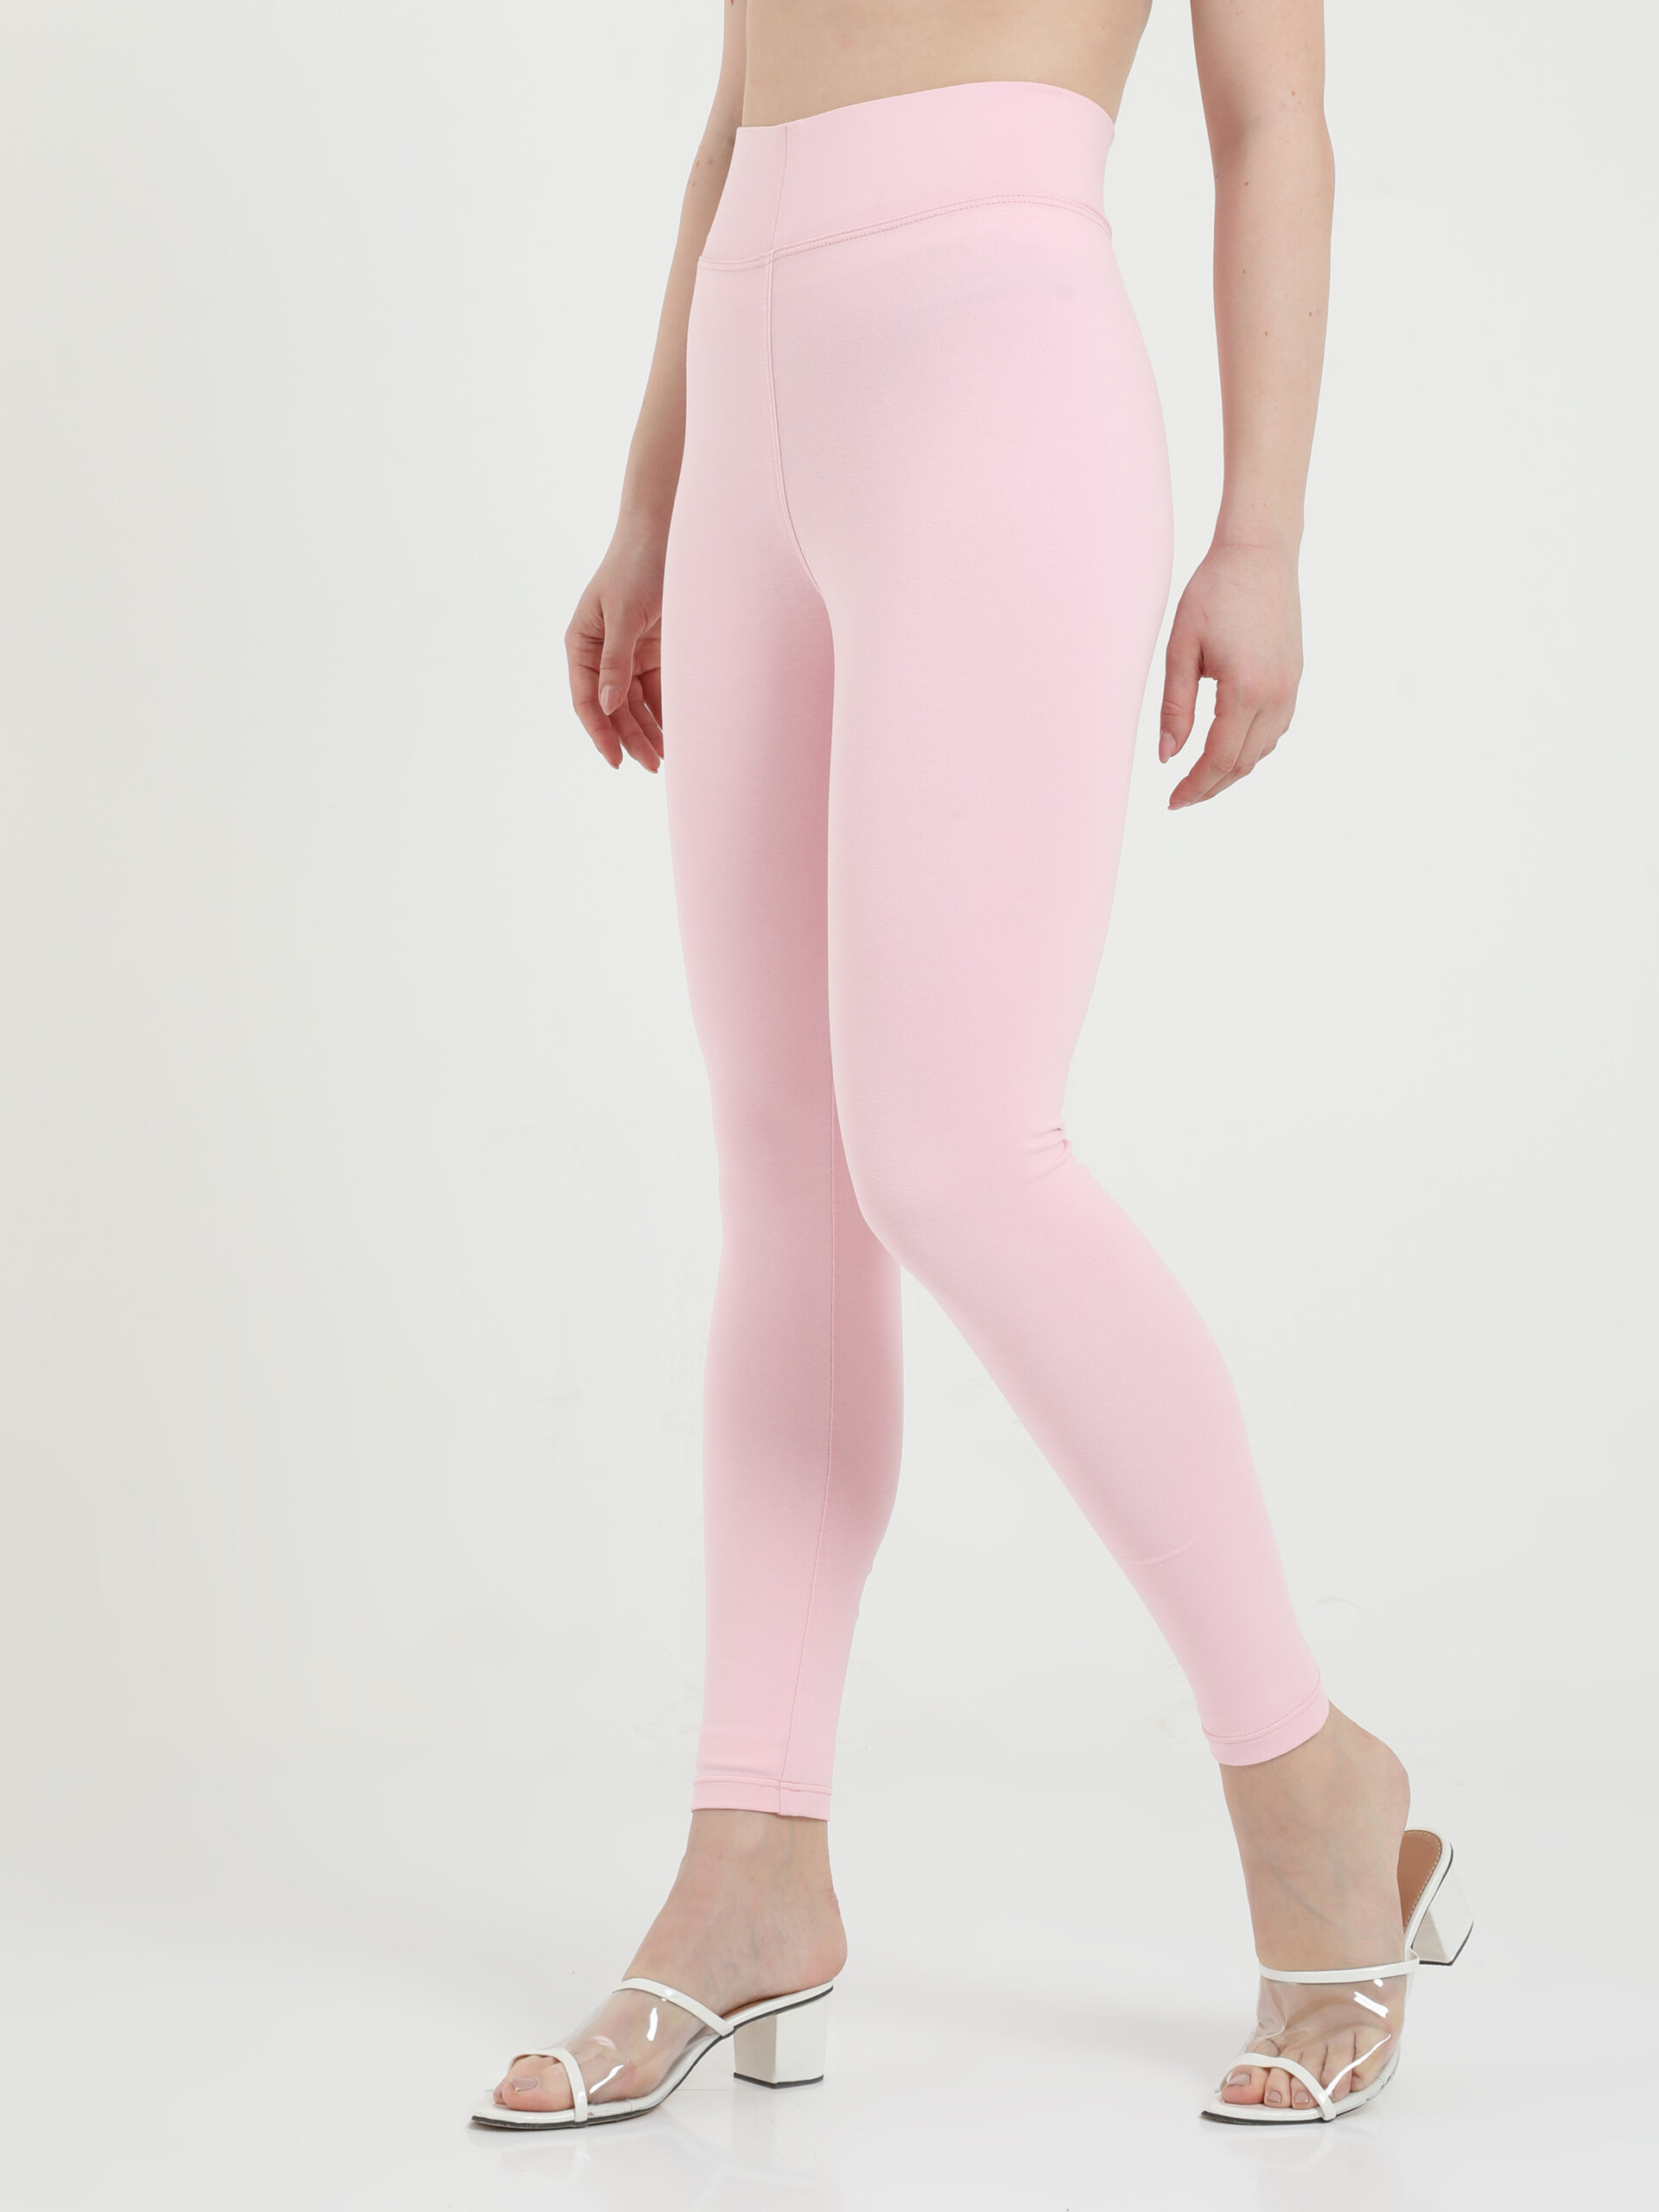 Light pink leggings for women Compression pant high waist - Belore